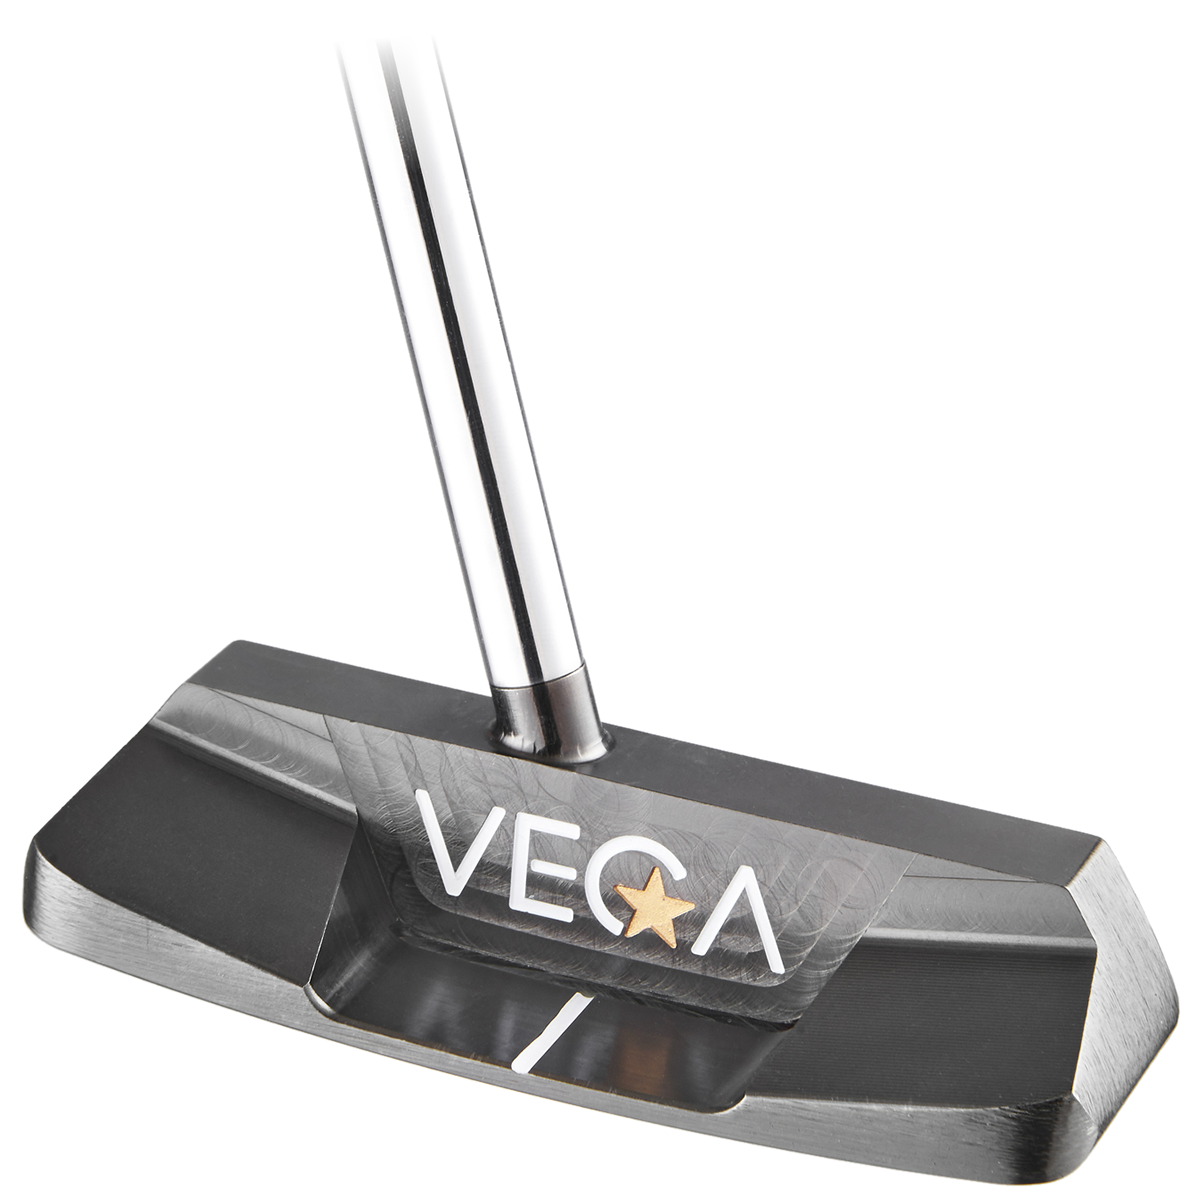 VEGA VP-05 Raw Limited Edition Putter